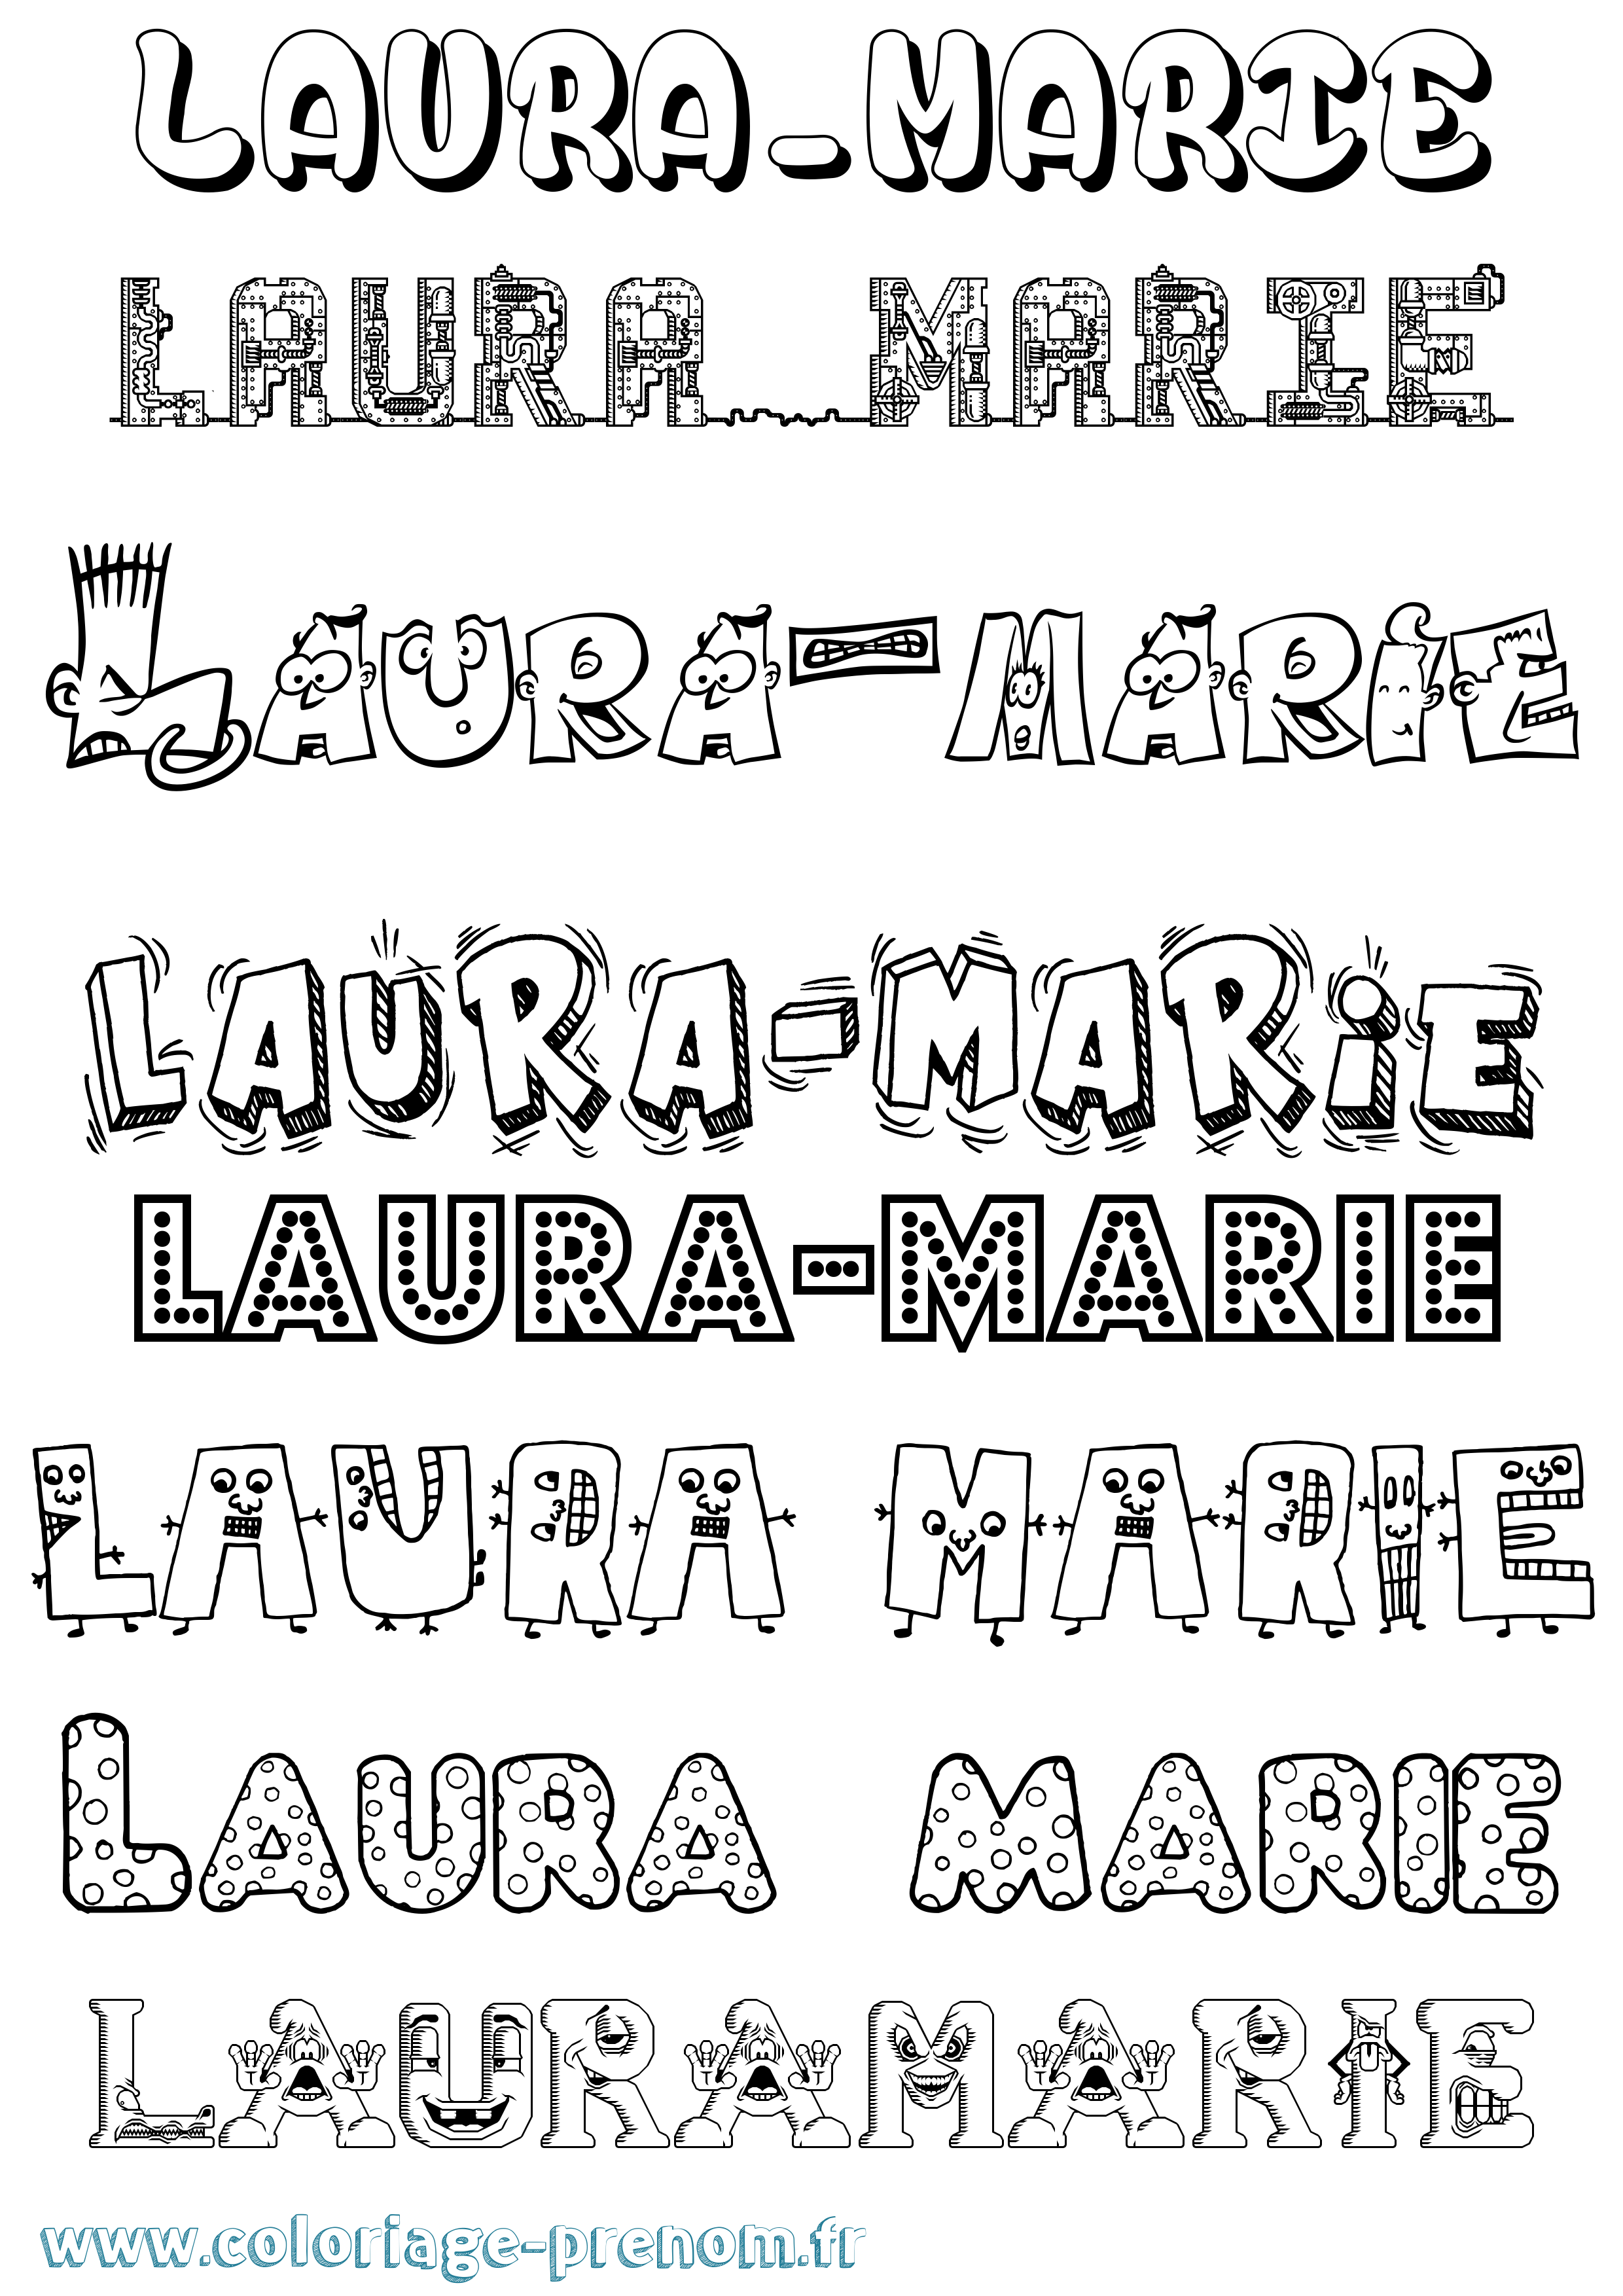 Coloriage prénom Laura-Marie Fun